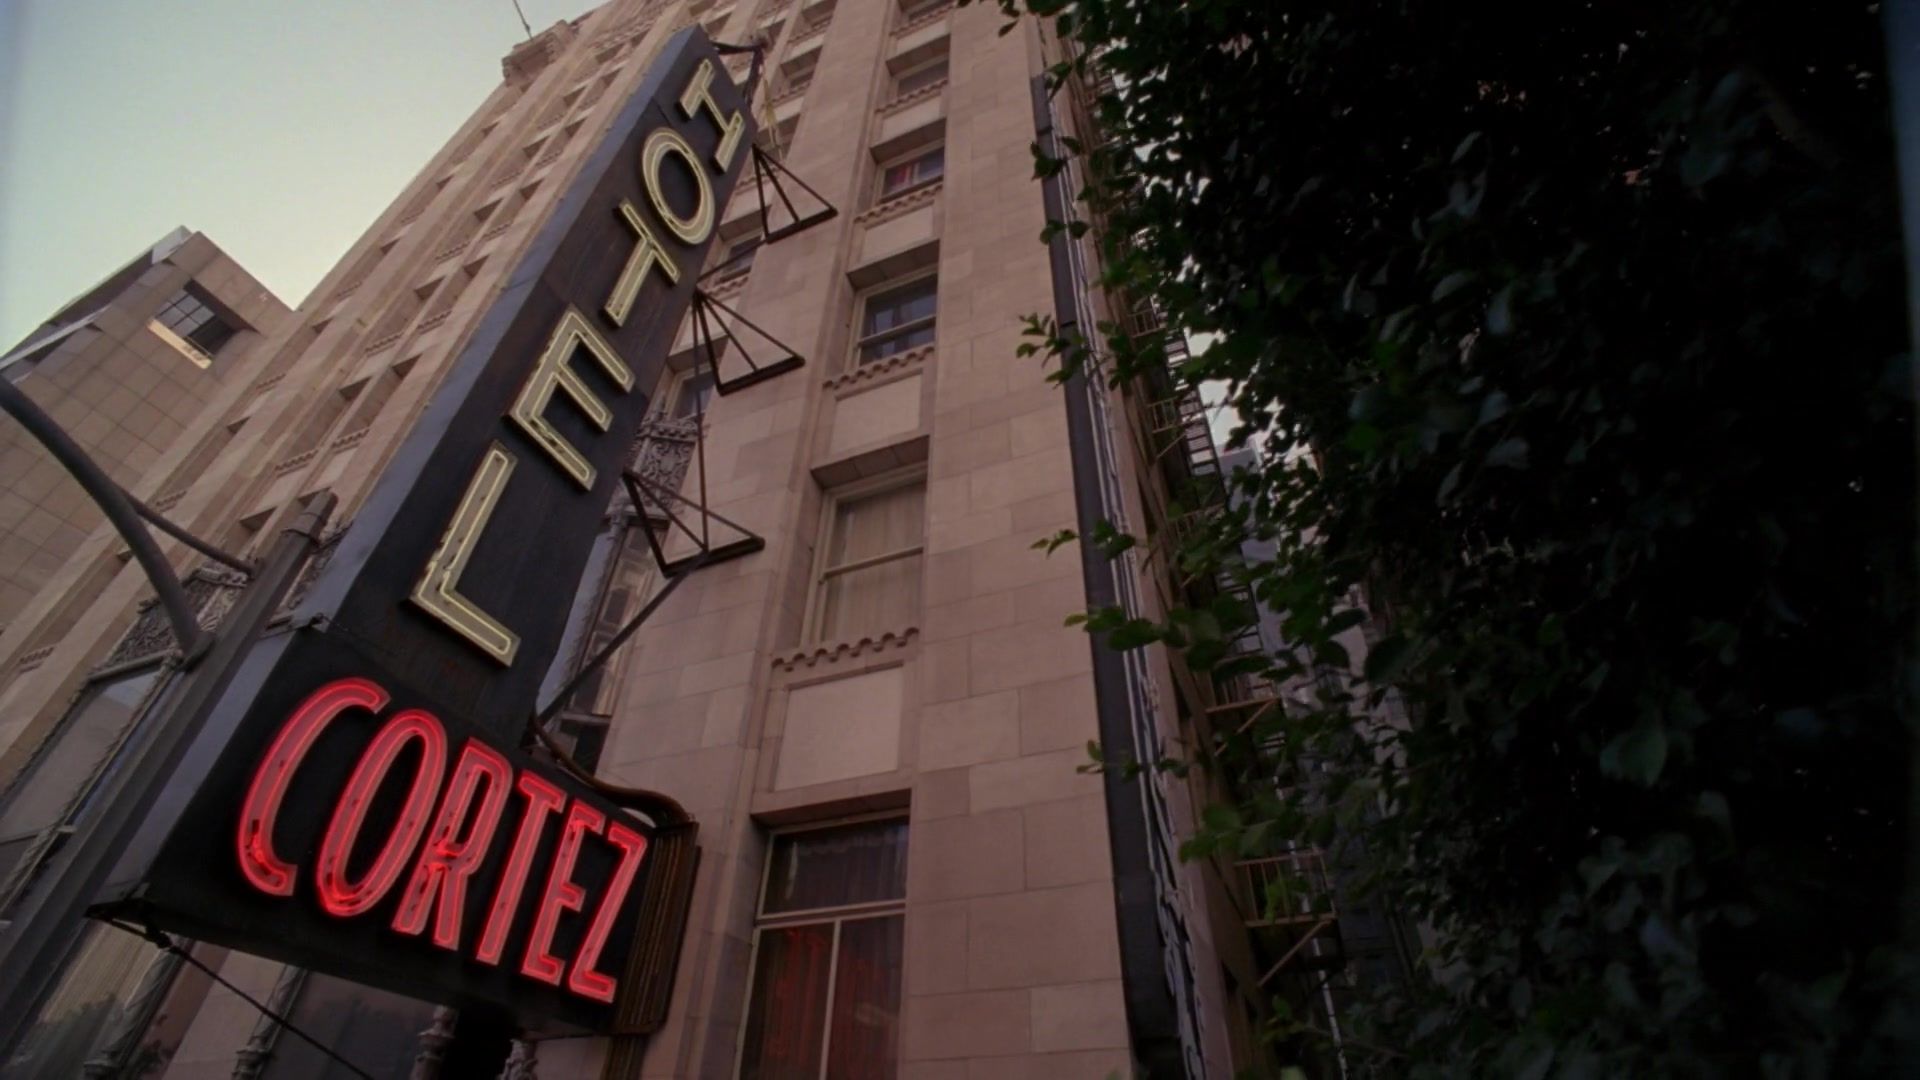 American Horror Story Hotel Cortez